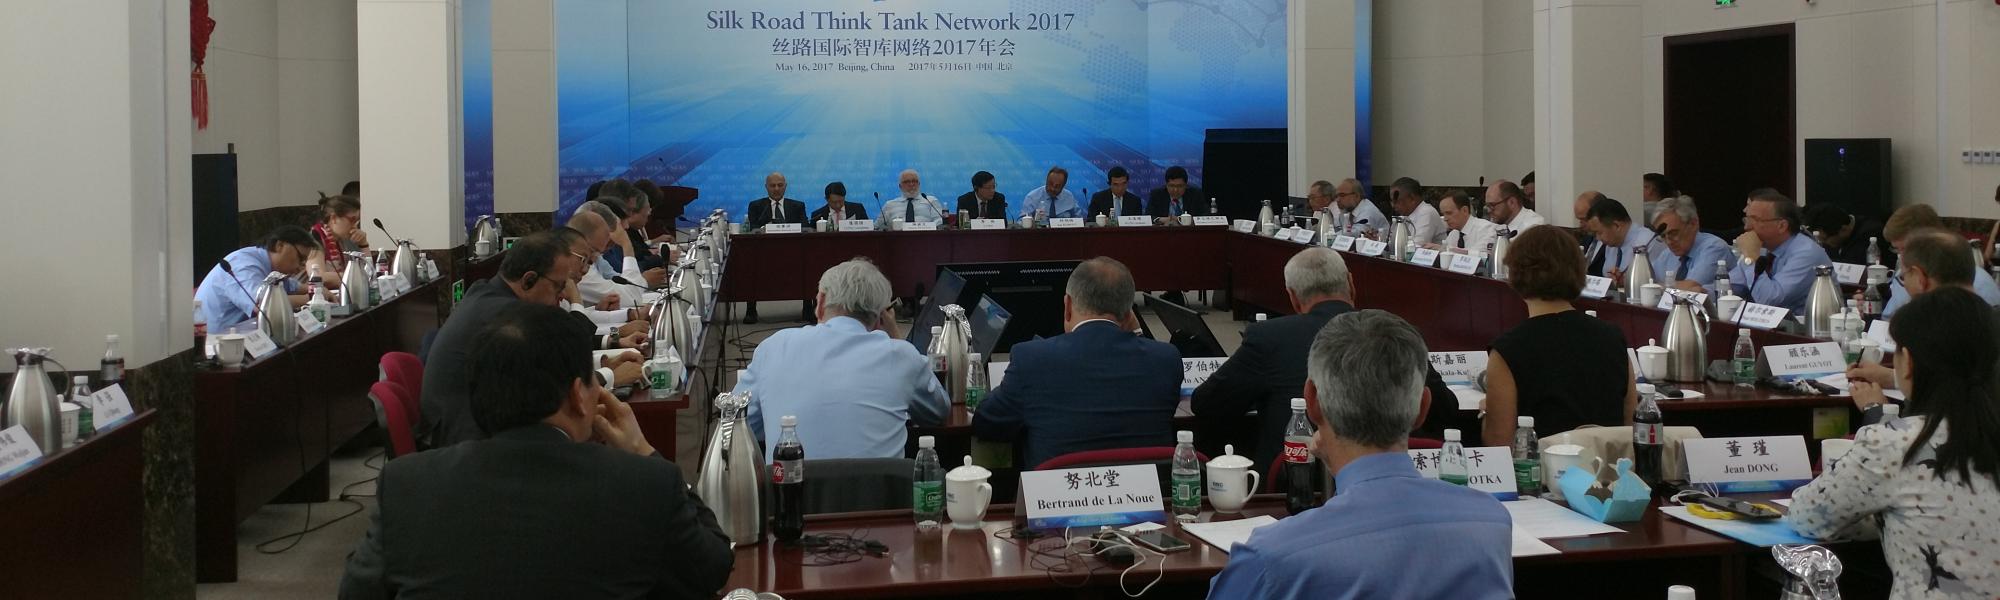 Silk Road Think Tank Network (SiLKS) 